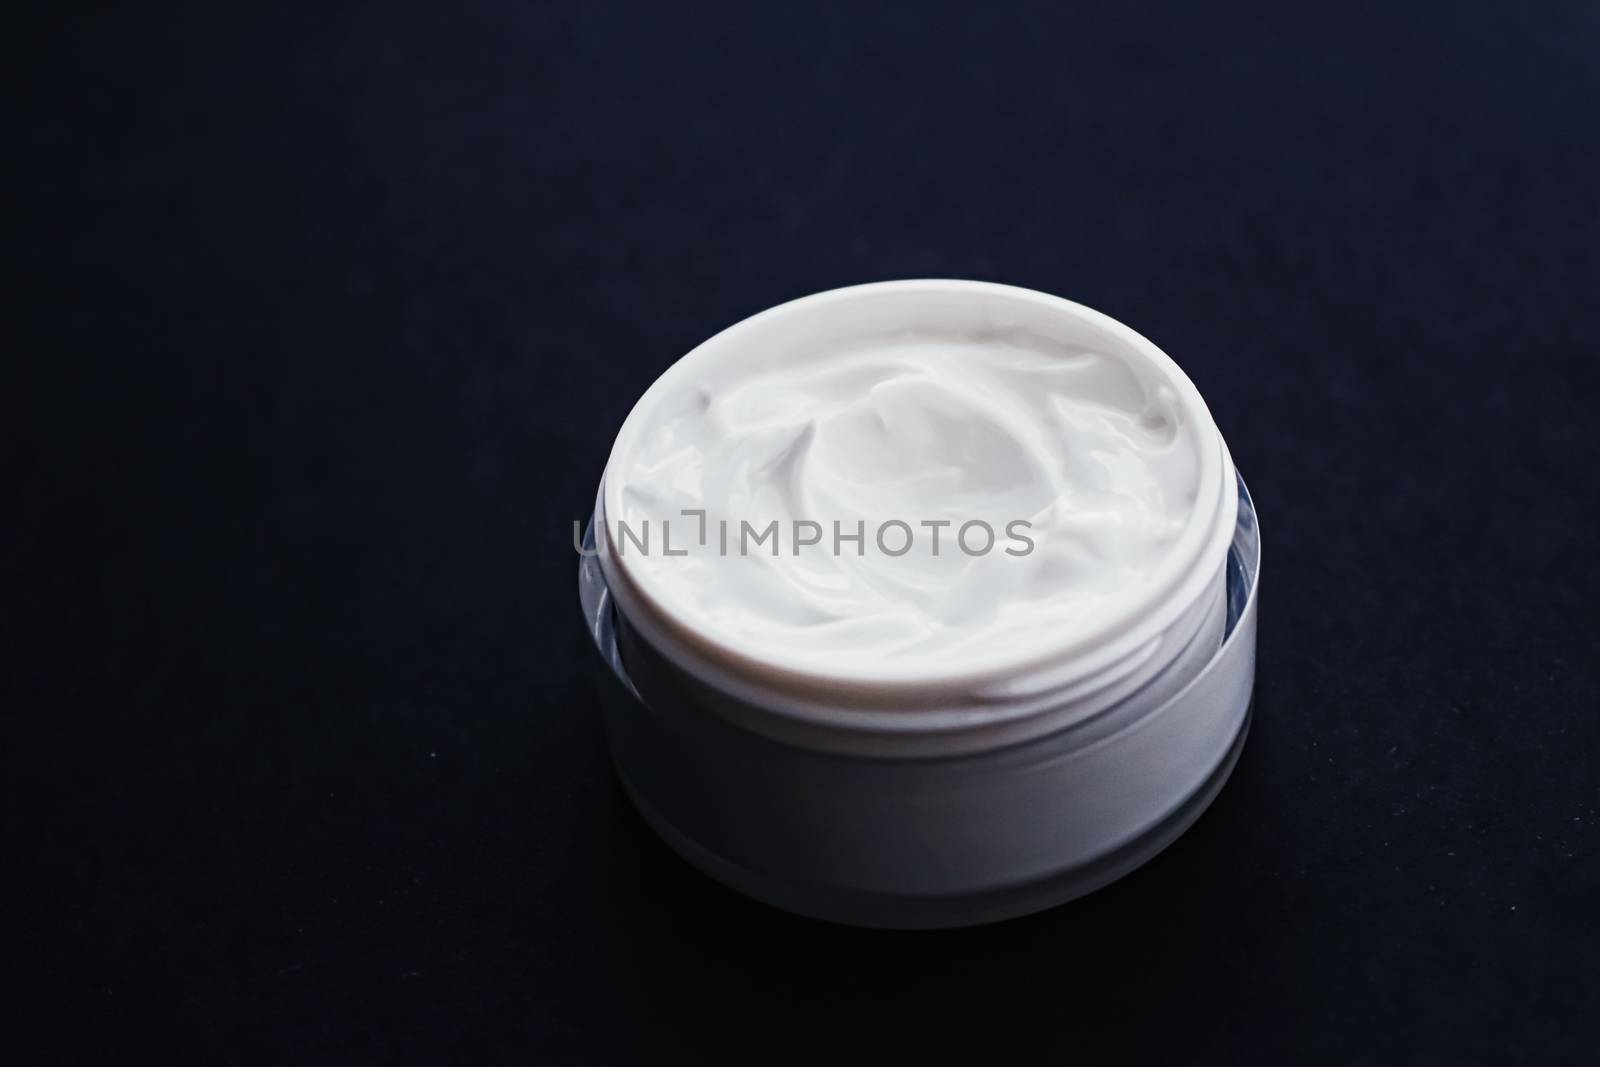 Face cream moisturizer, luxury skincare and anti-aging cosmetics, minimalistic design and brand product concept